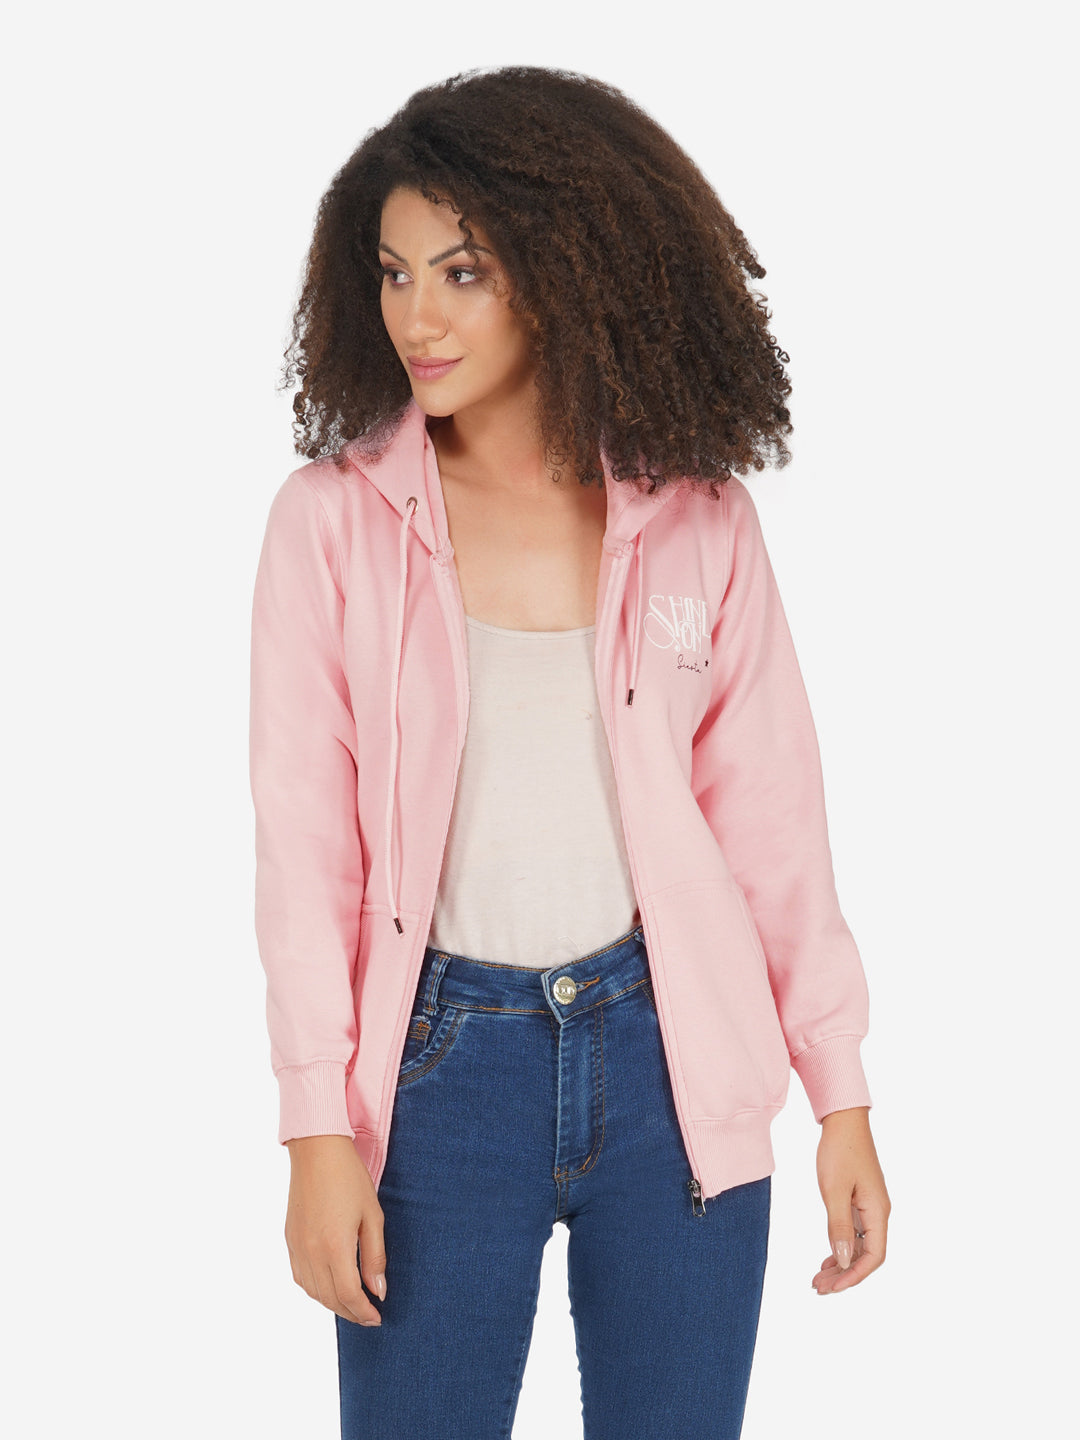 Light Pink Fleece Warm Hoodie Sweatshirt